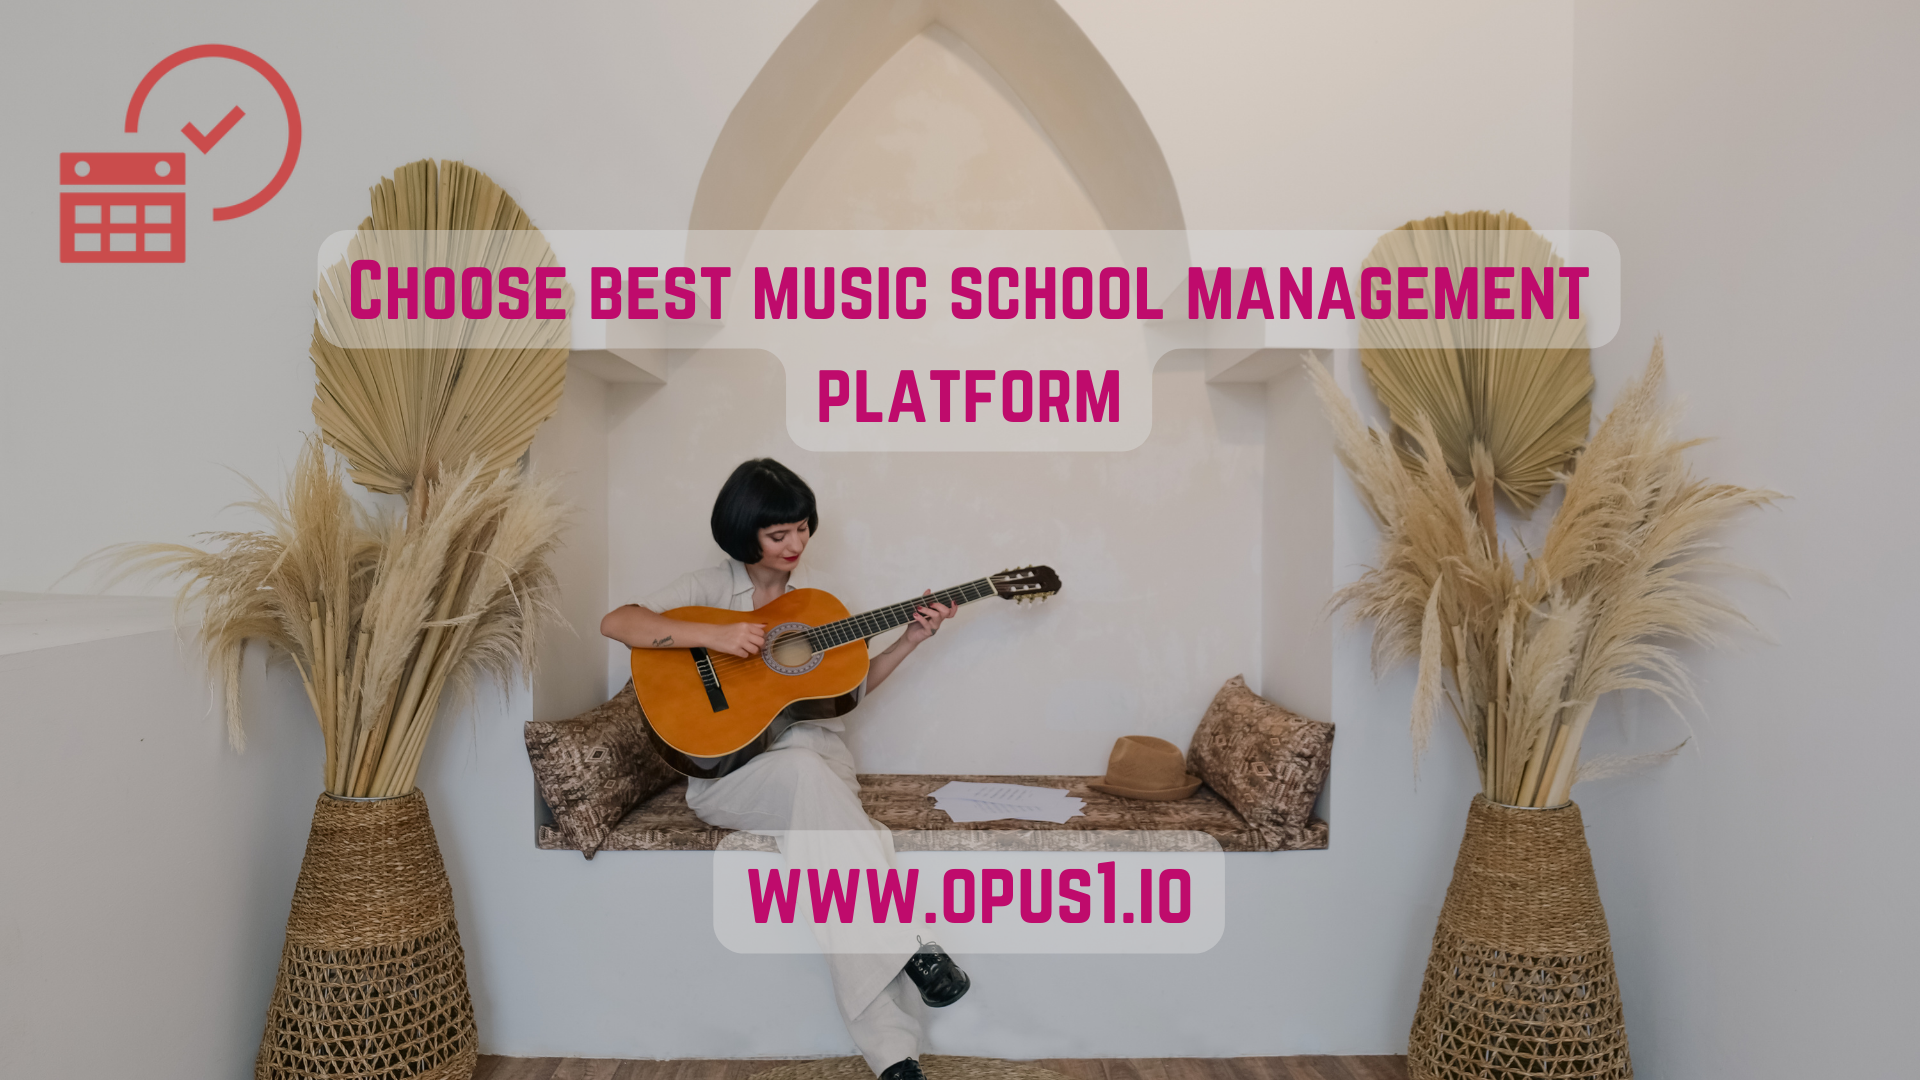  Choose best music school management platform